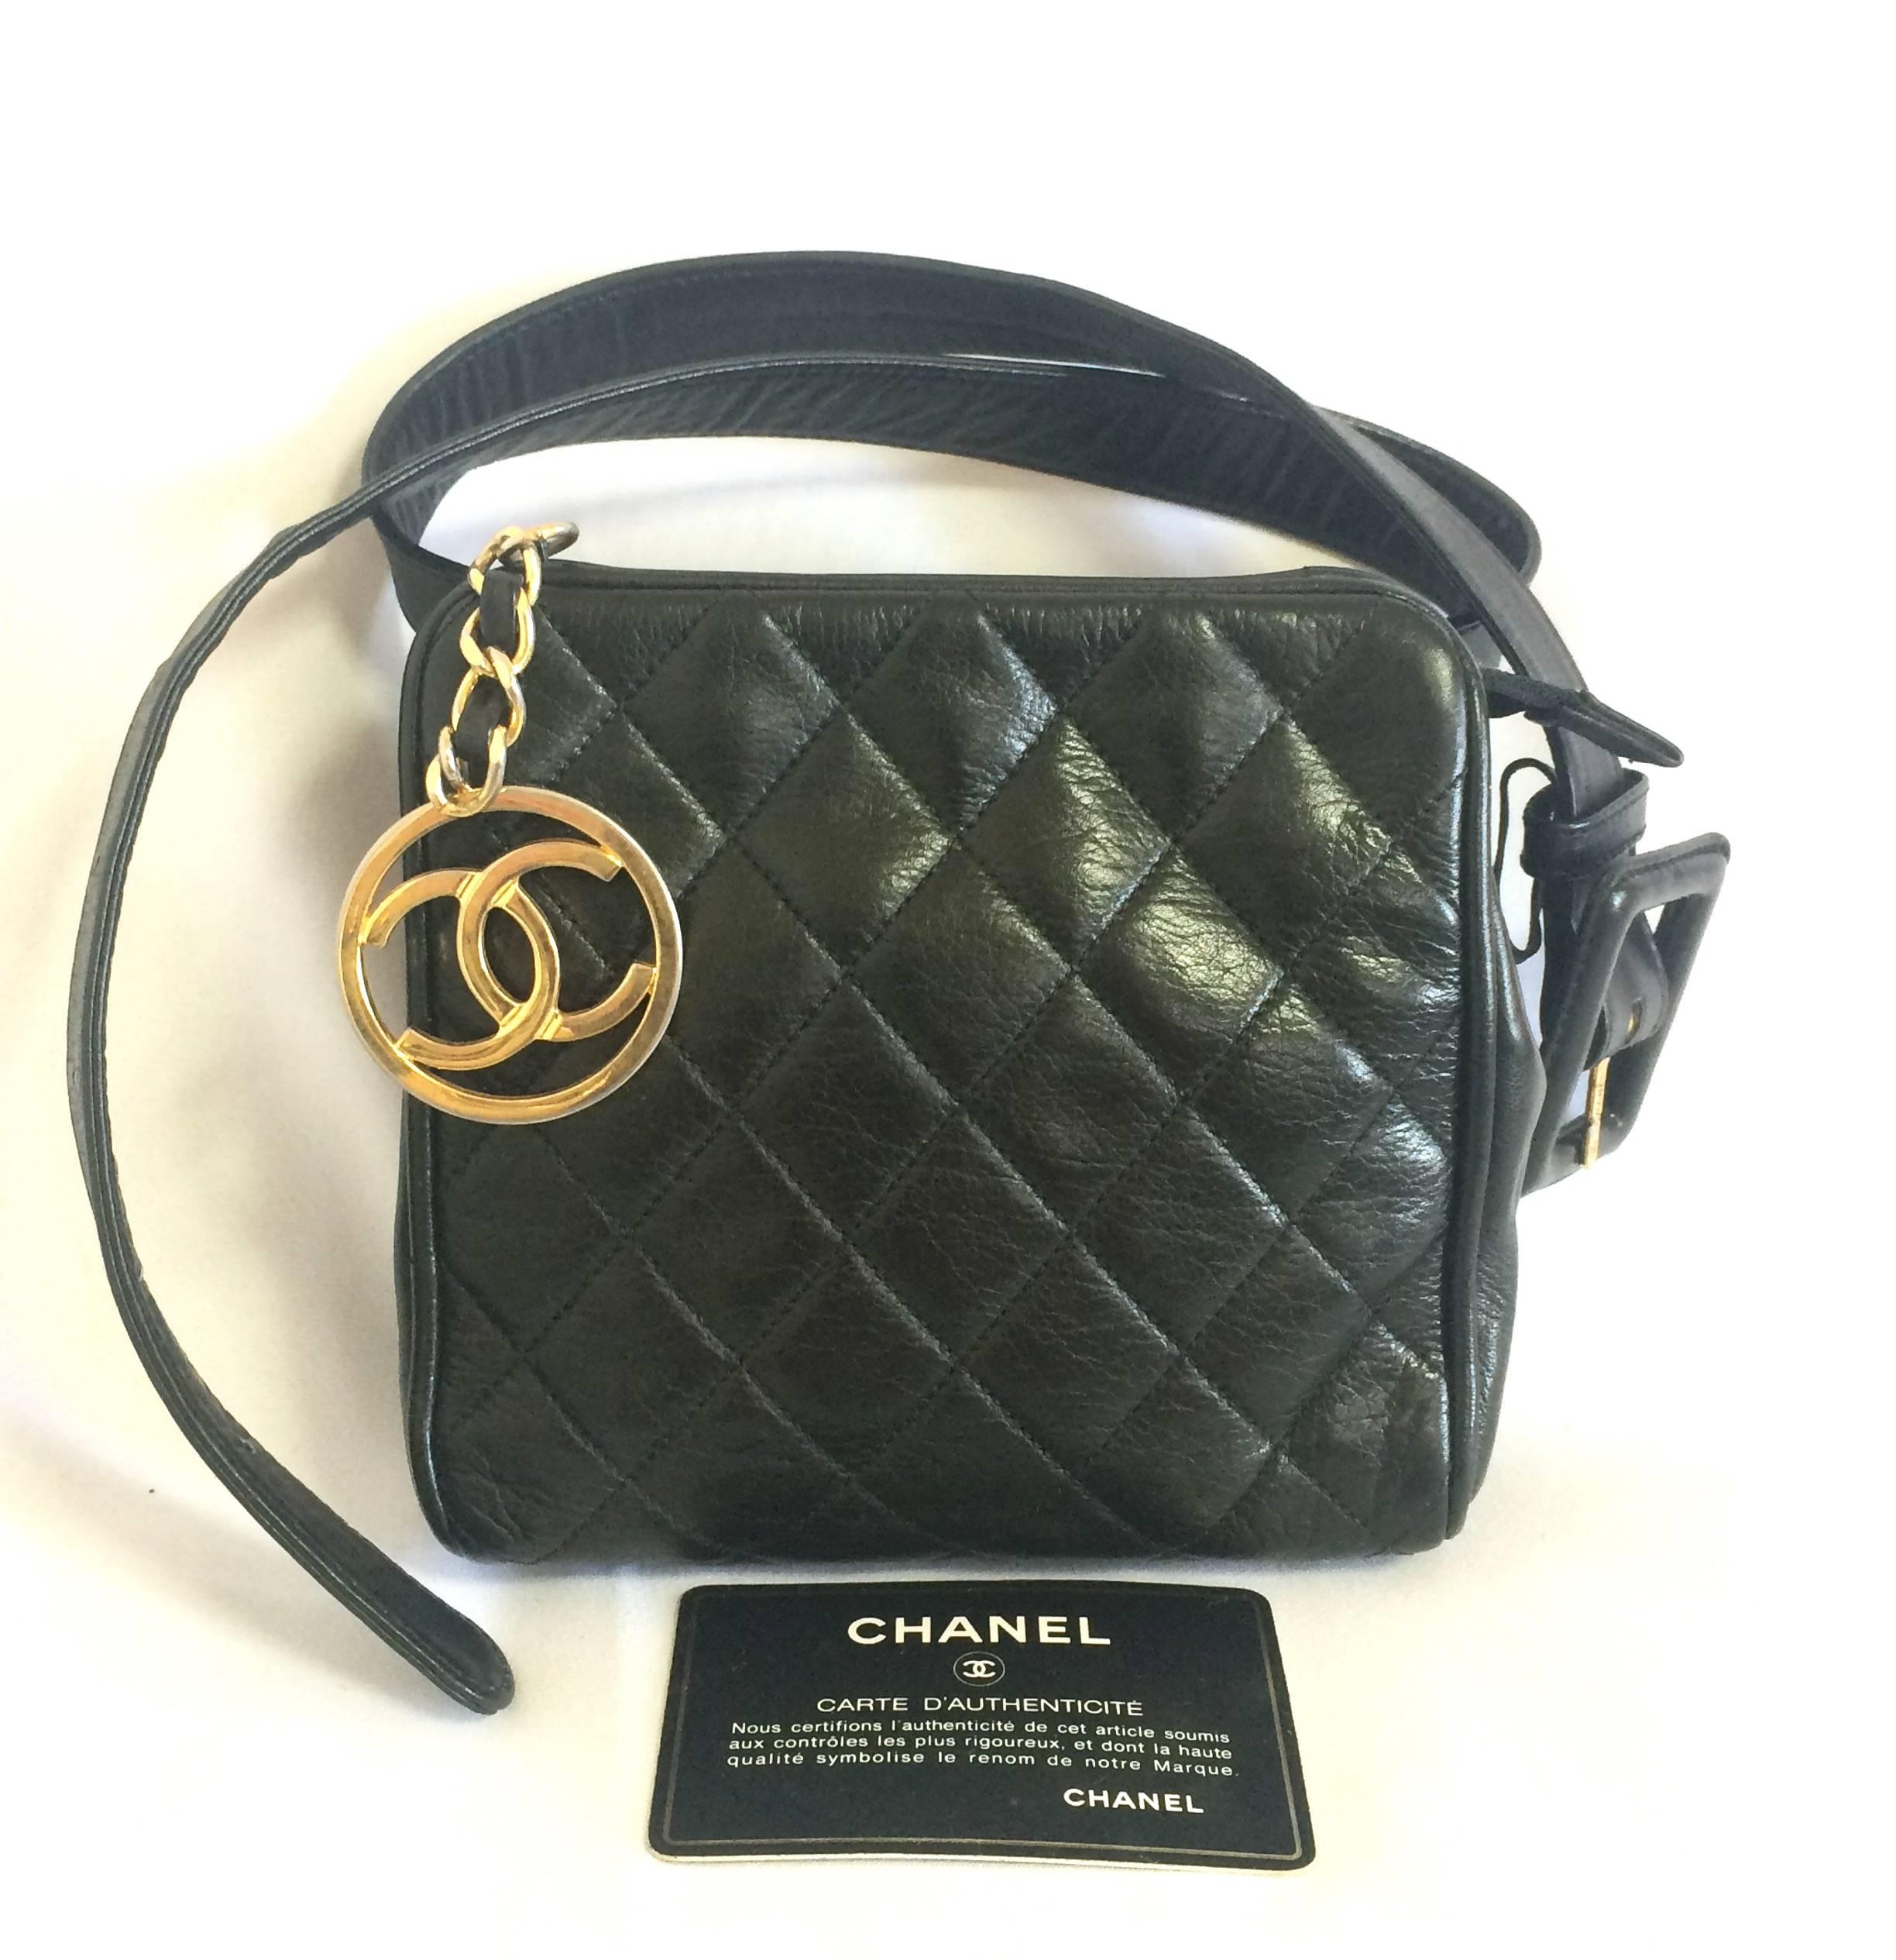 1990s.Vintage CHANEL black lambskin square shape waist purse, fanny pack with golden round CC closure motif. 28